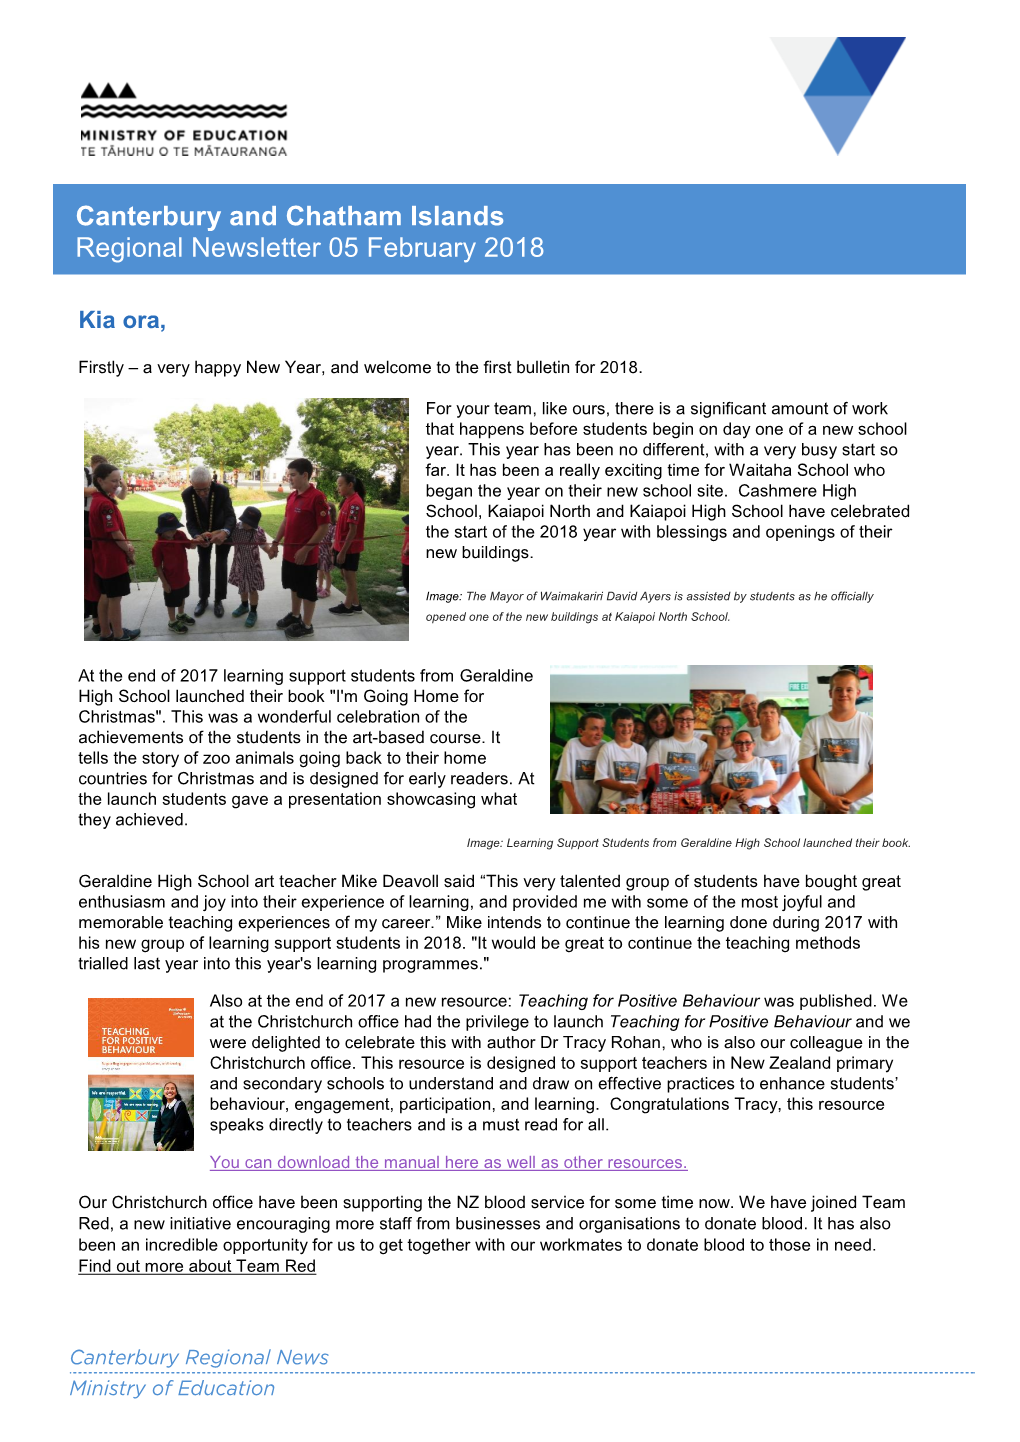 Canterbury Education Newsletter 05 February 2018